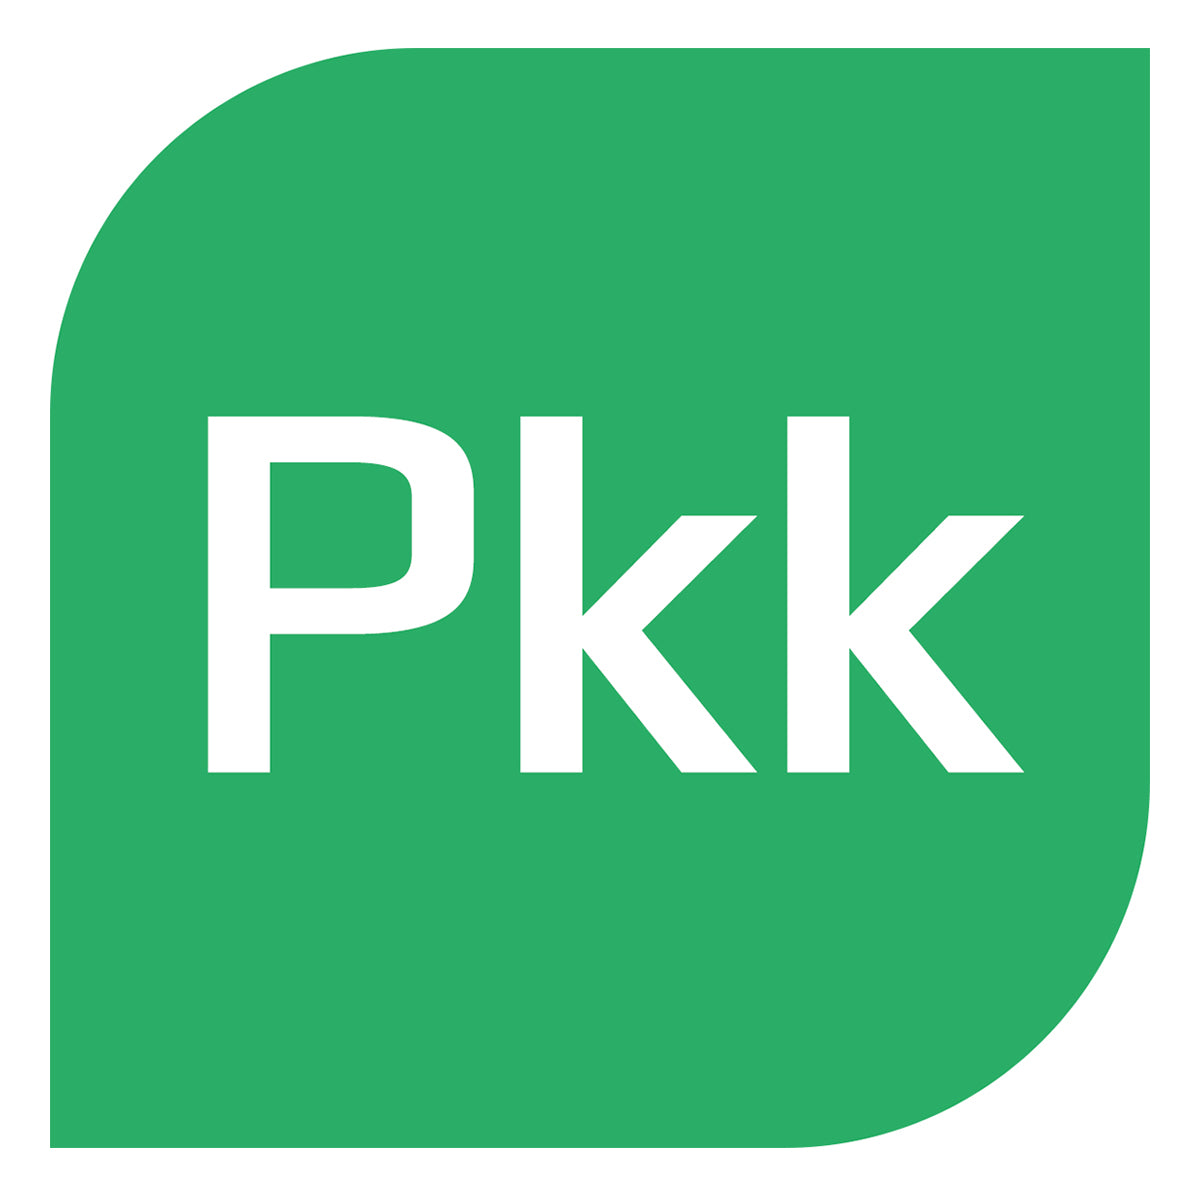 PrintKK : Free Print on Demand